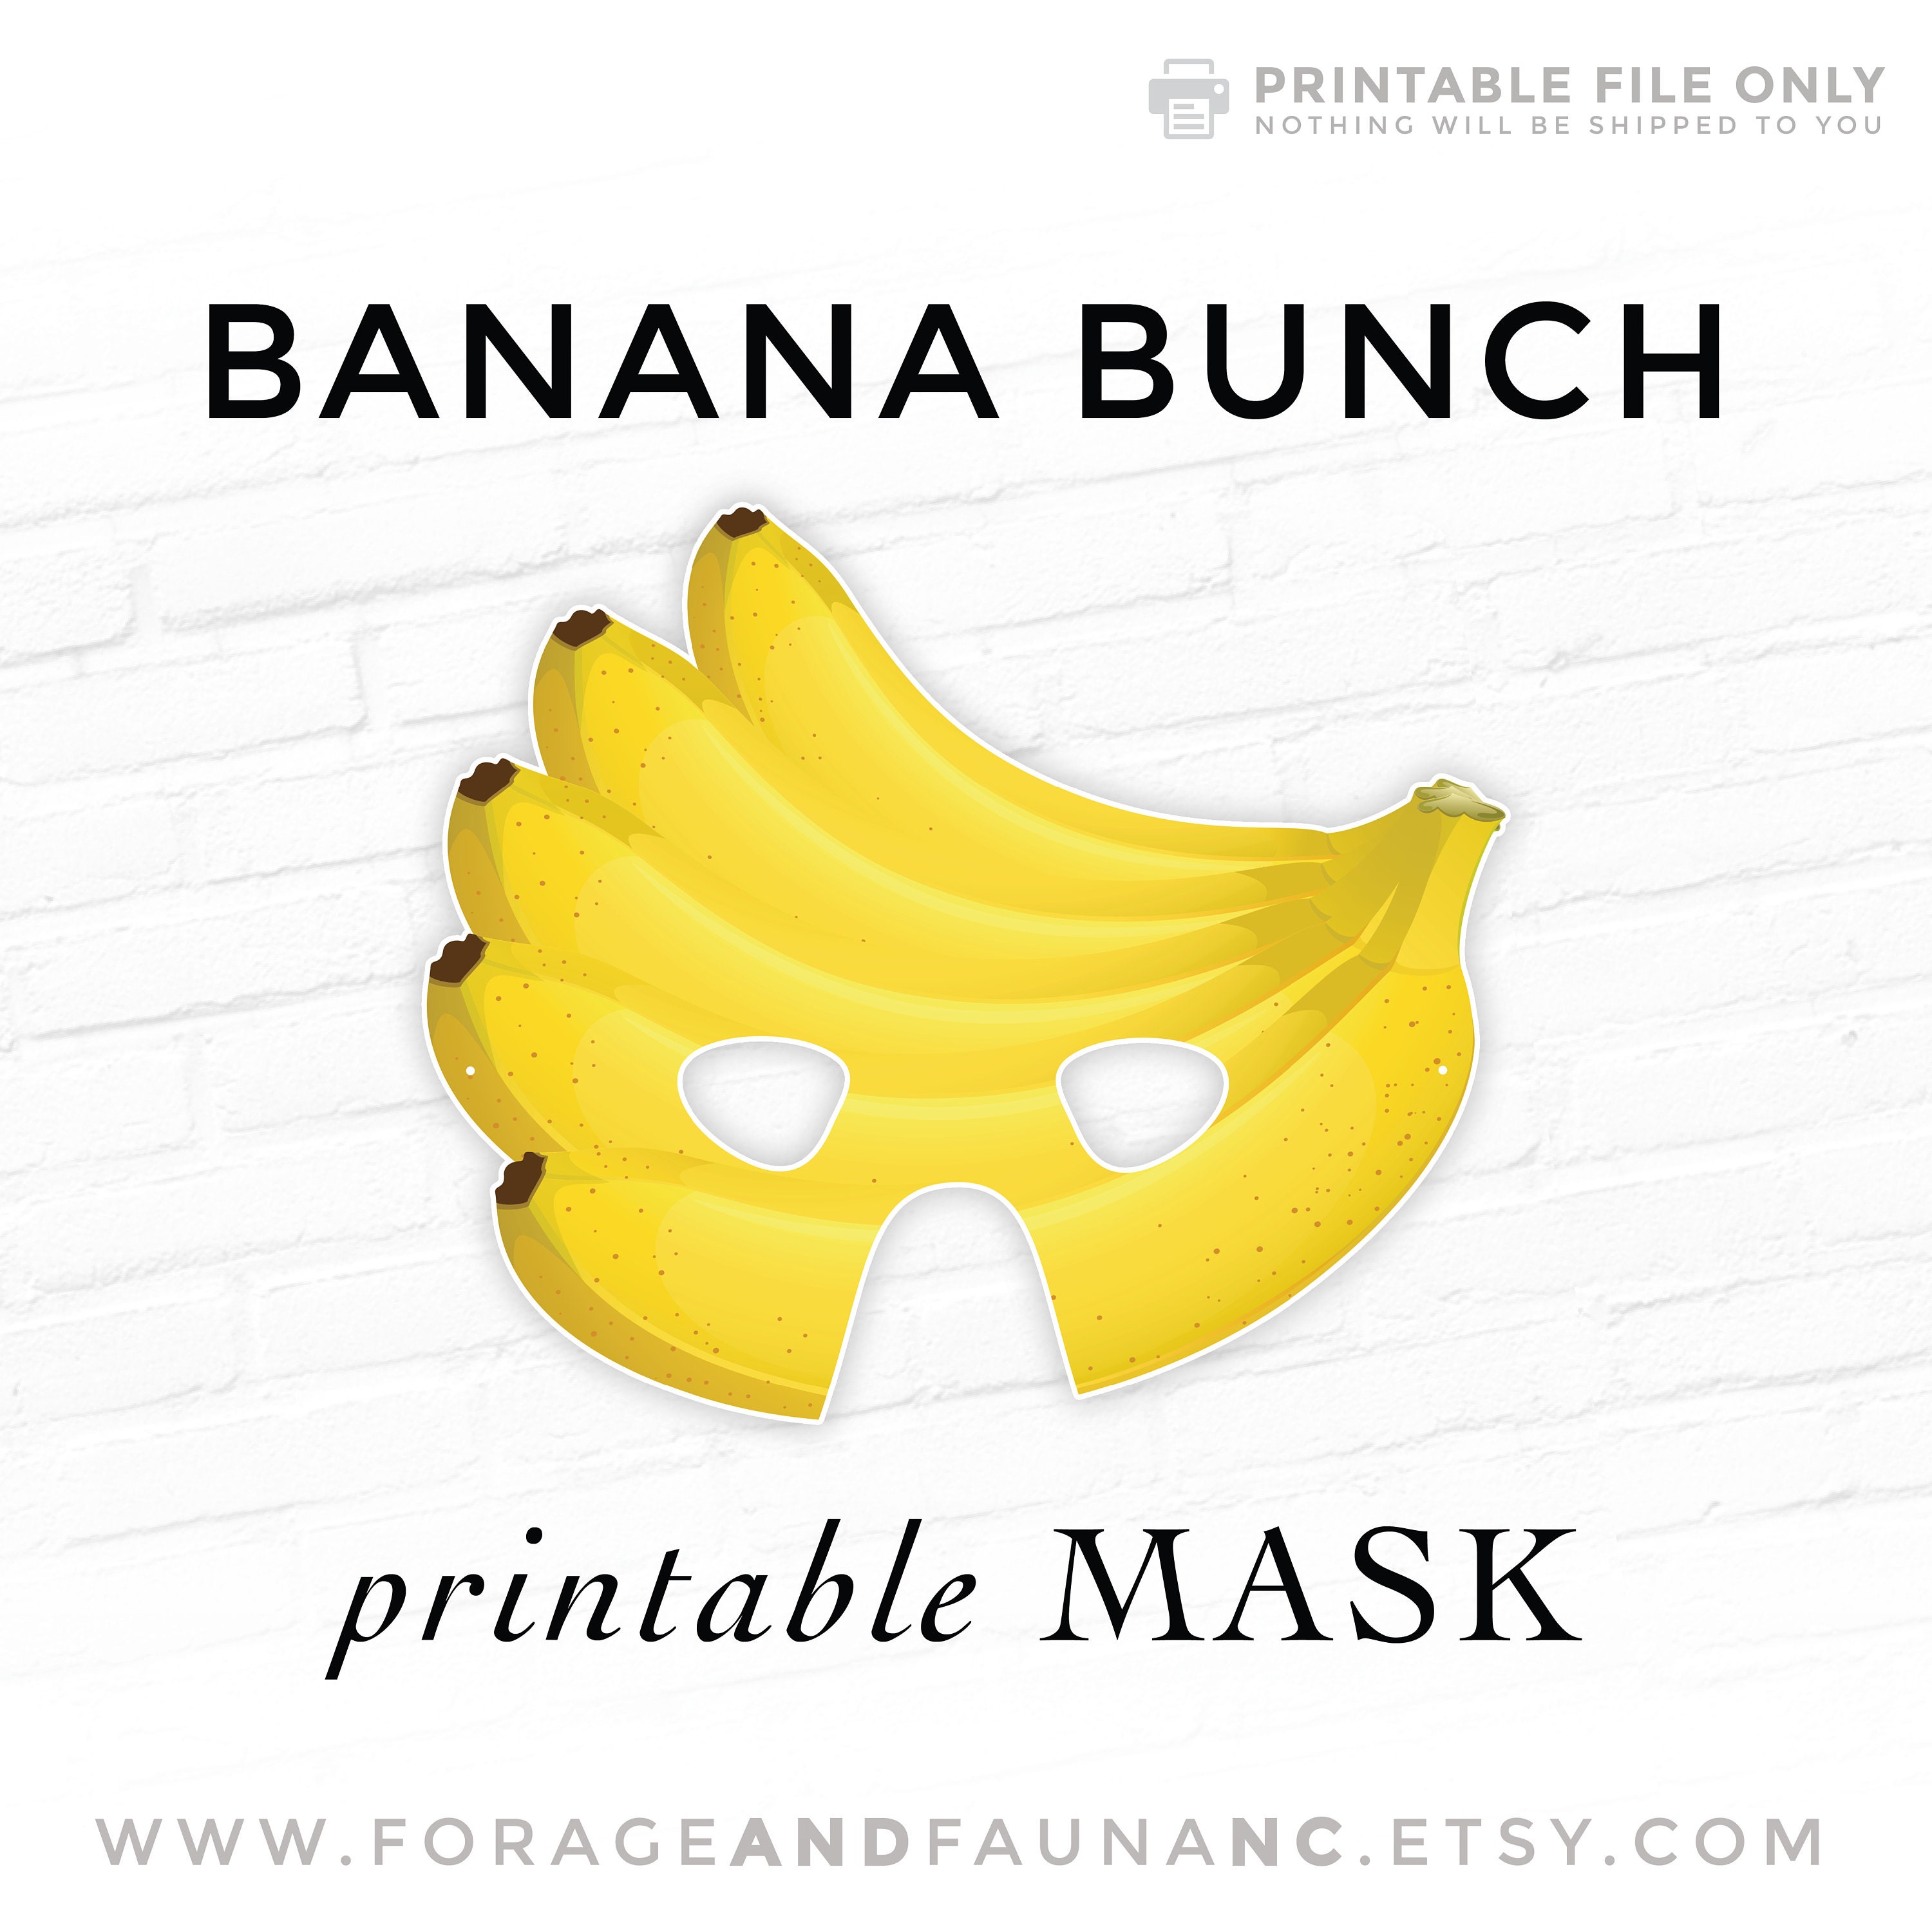 homemade banana strawberry facial masks